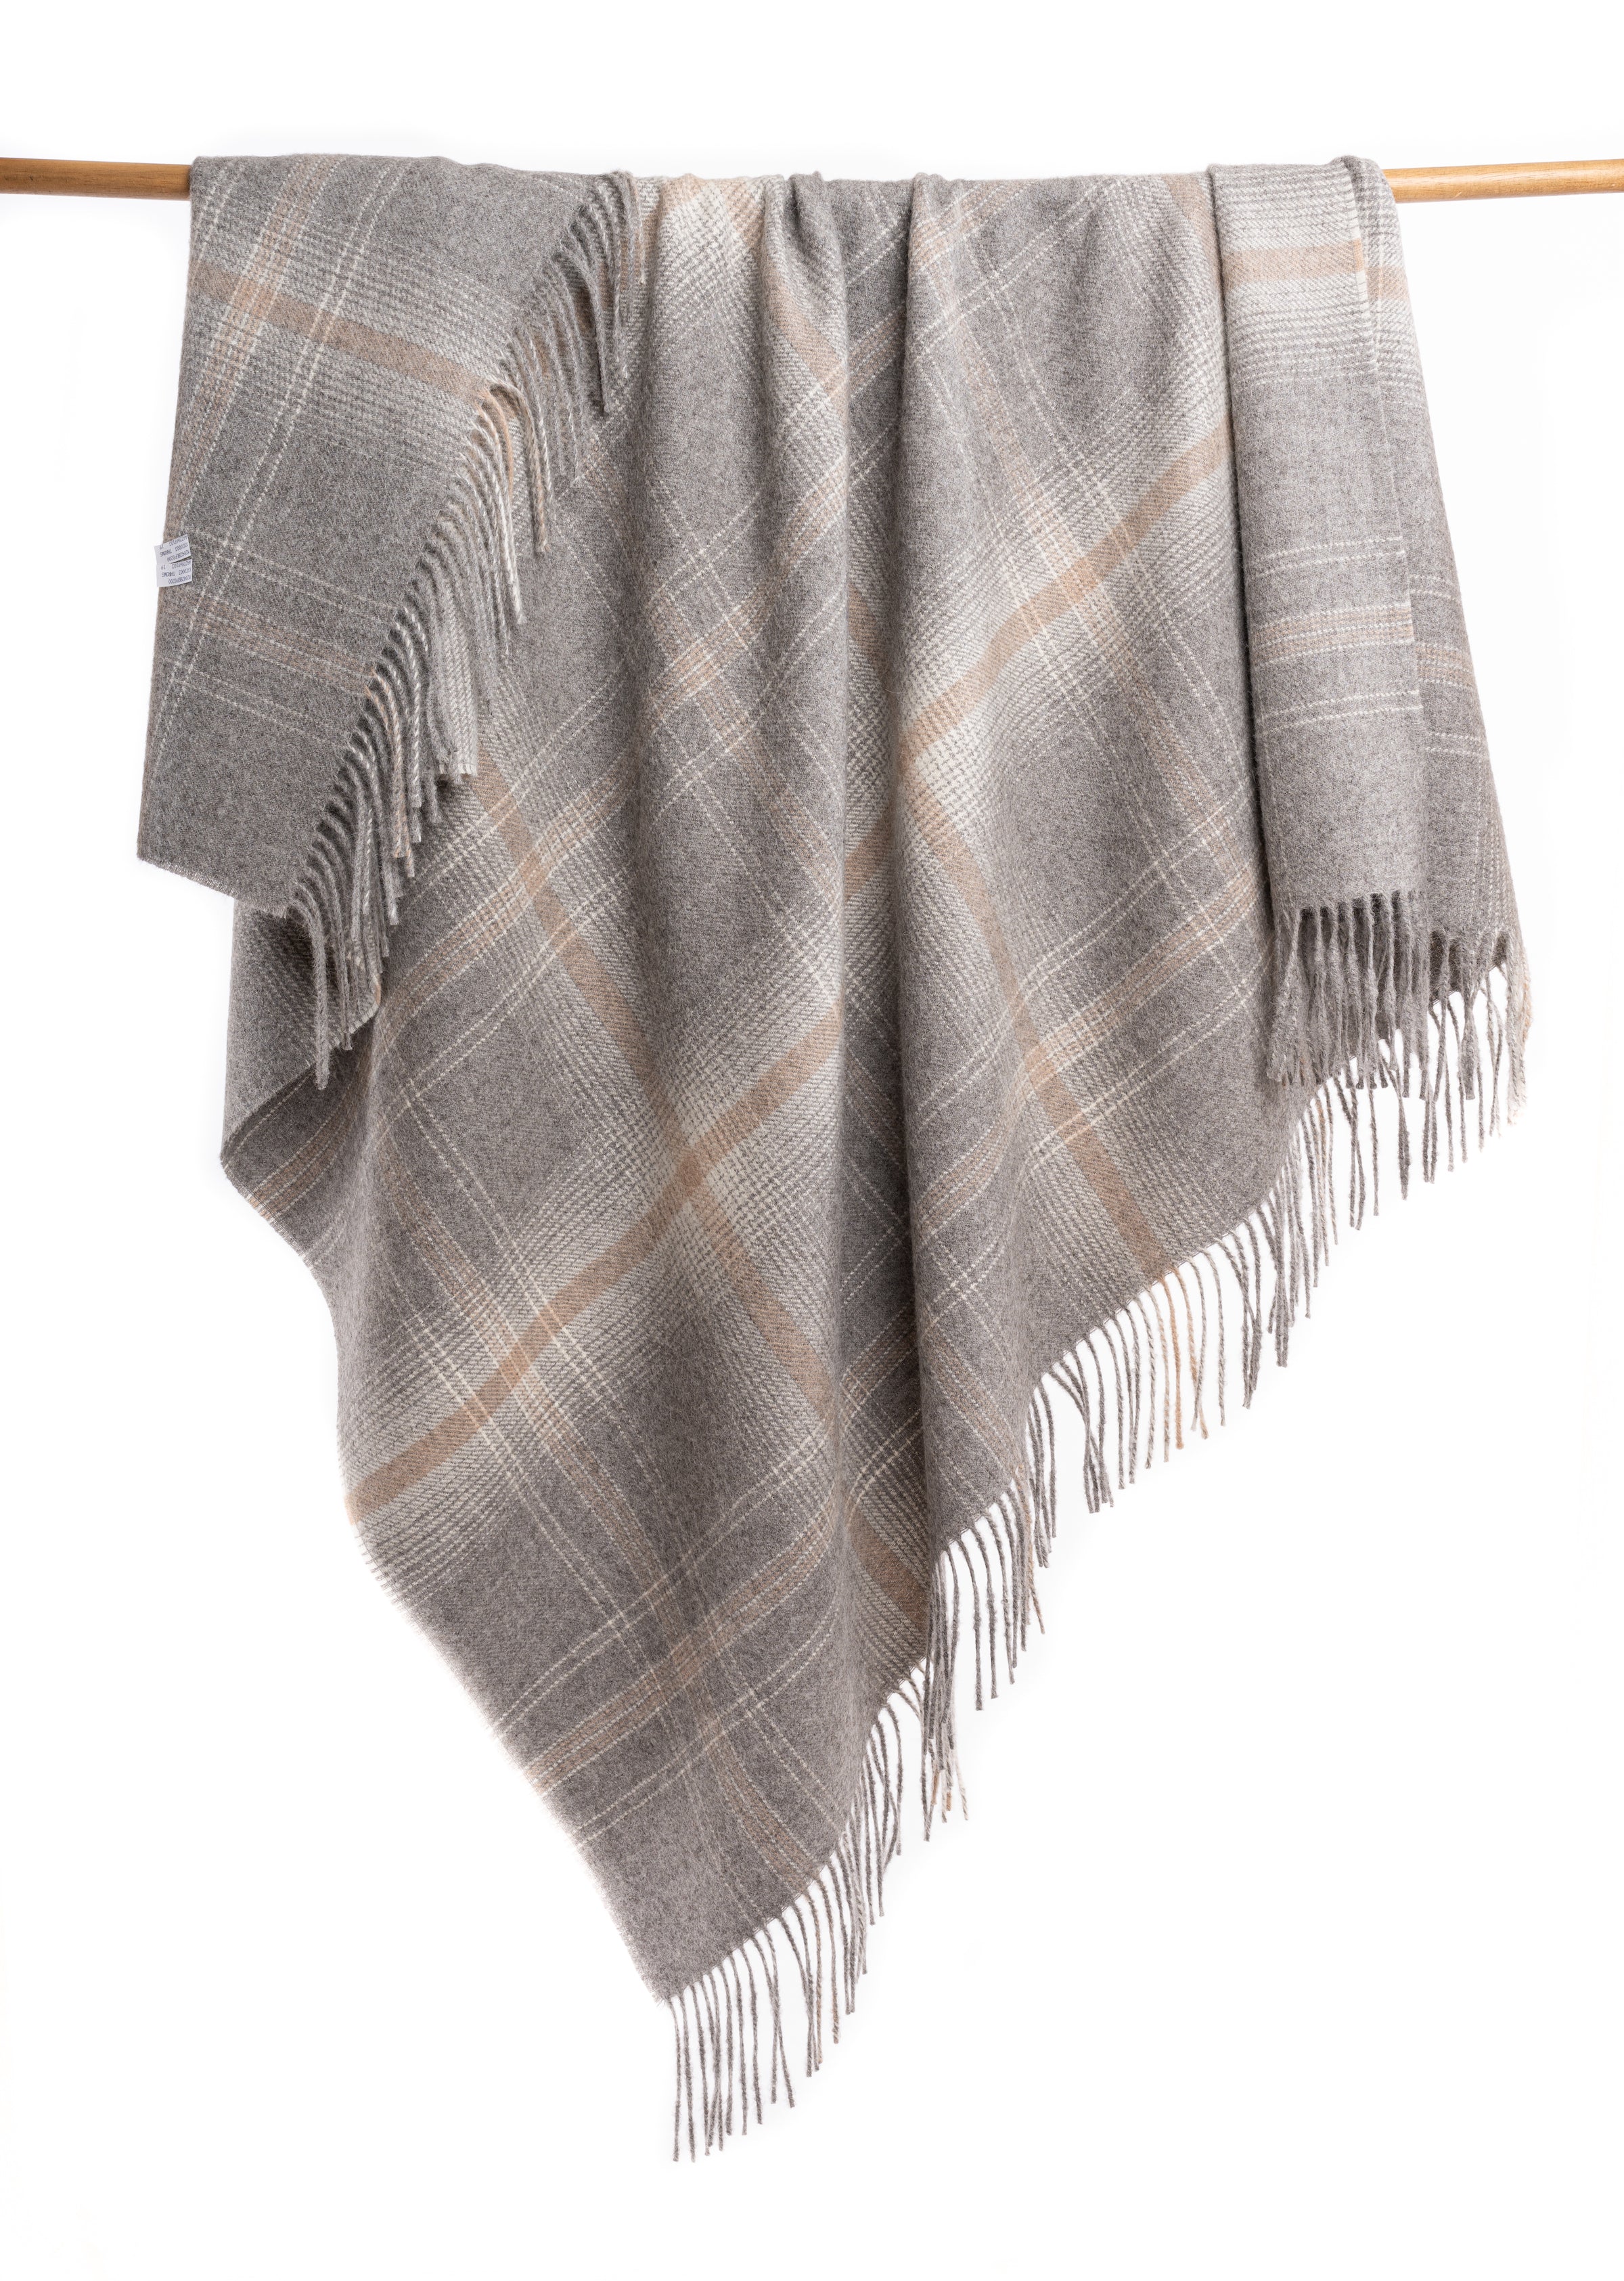 Alpaca Blanket - Plaid (Light Grey) - New Pattern